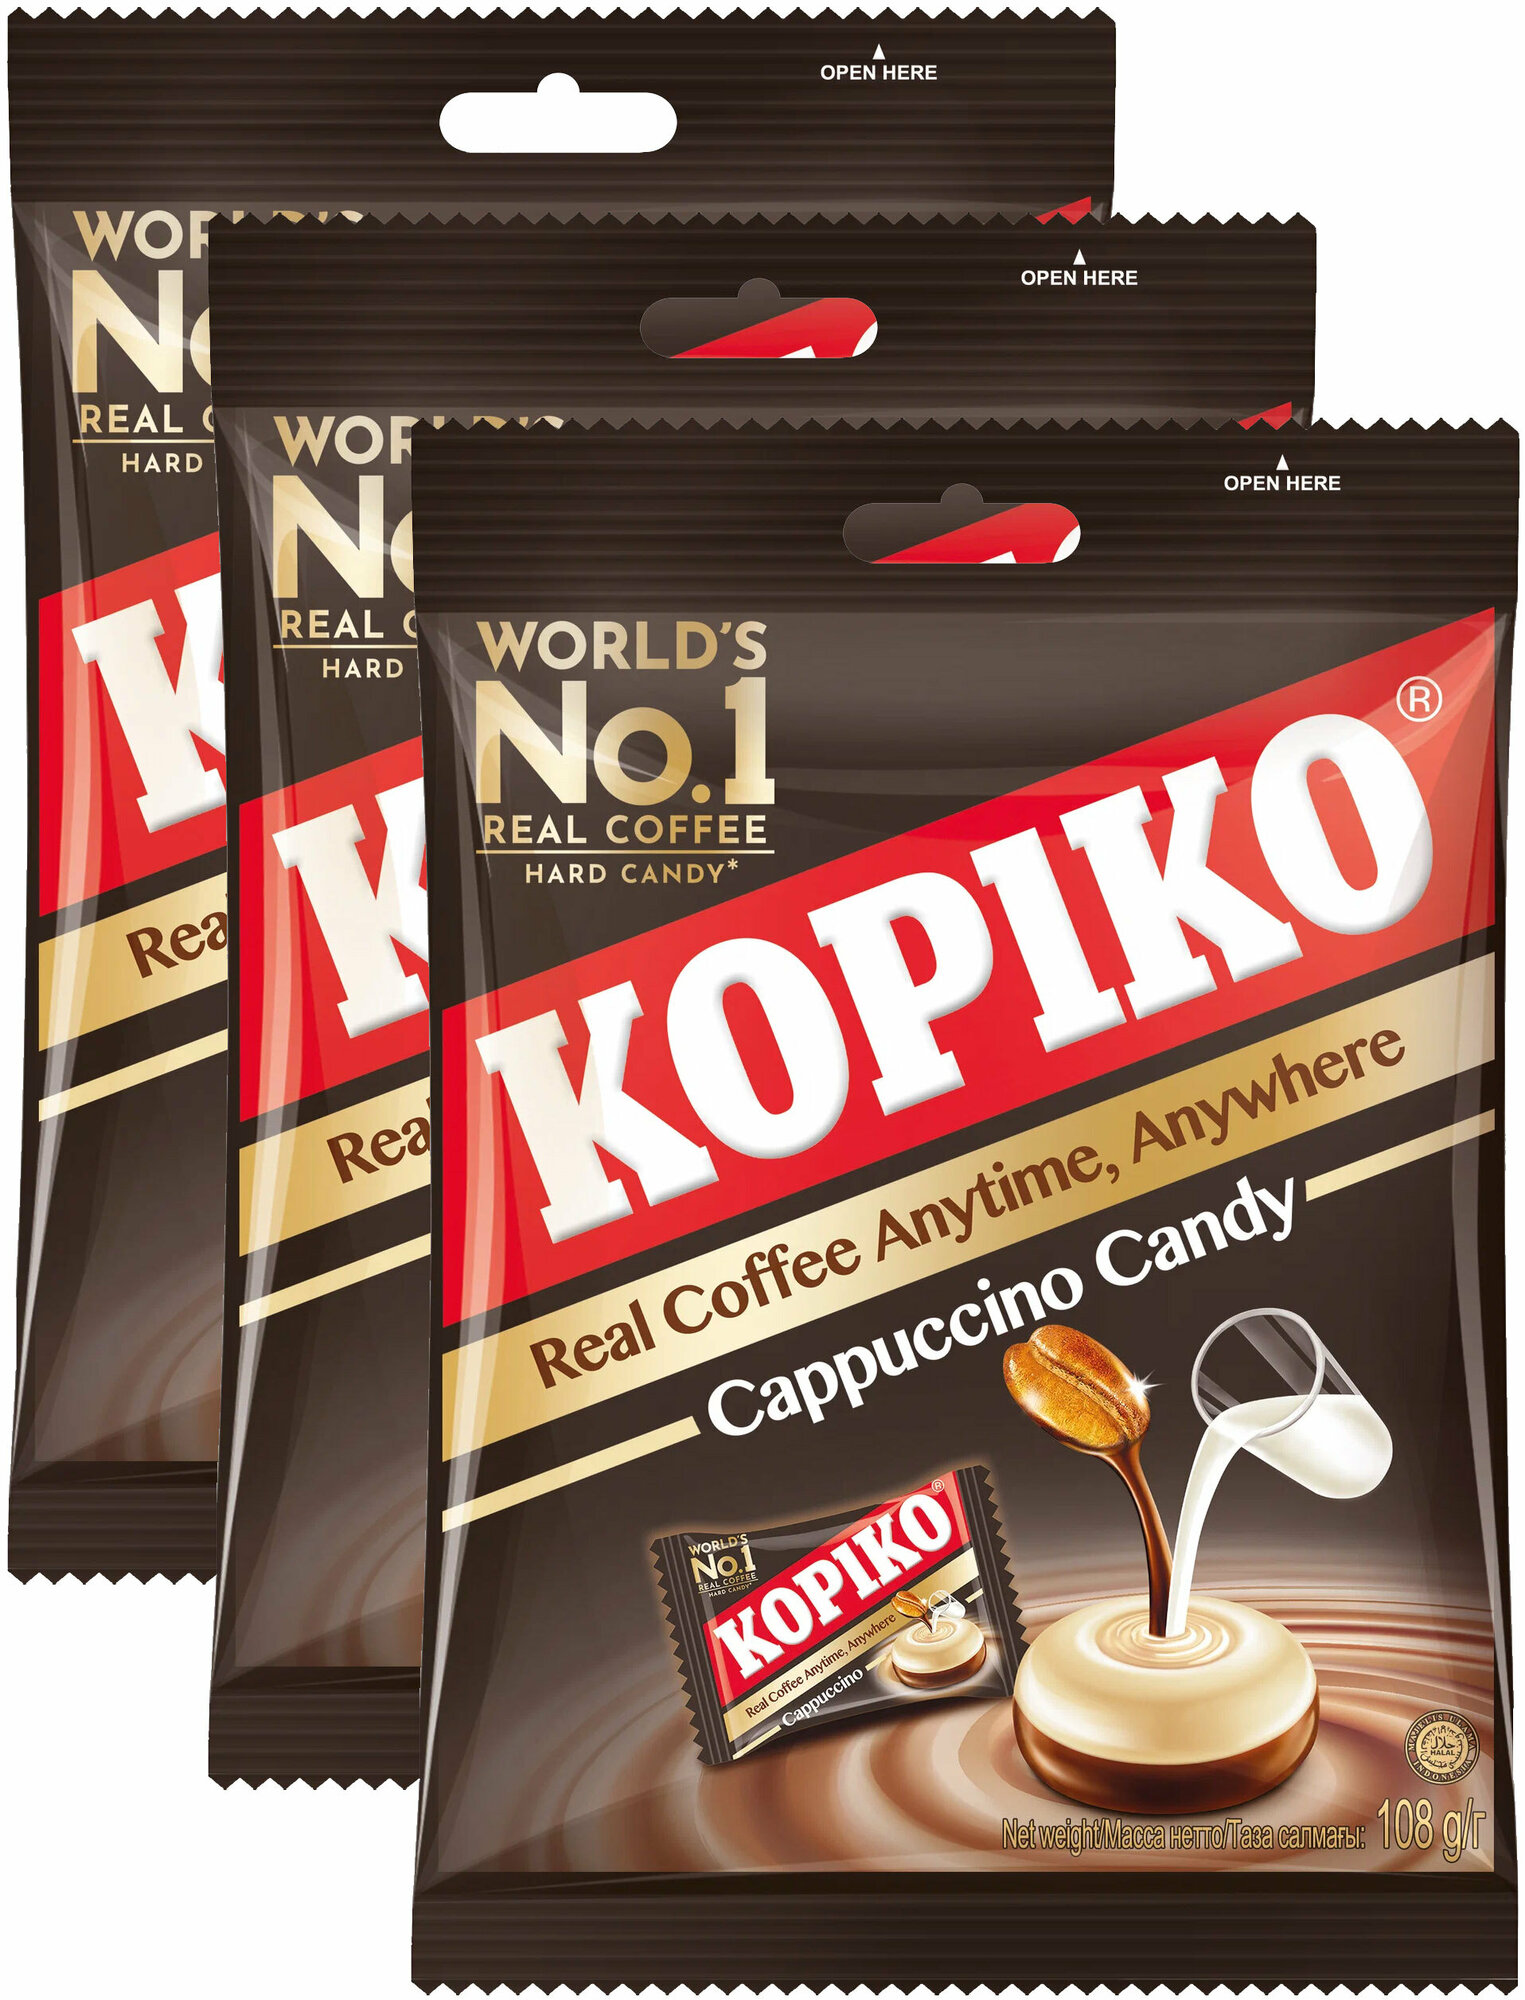 Kopiko Cappuccino Candy 108г х 3 уп, Леденцы со вкусом капучино от Копико